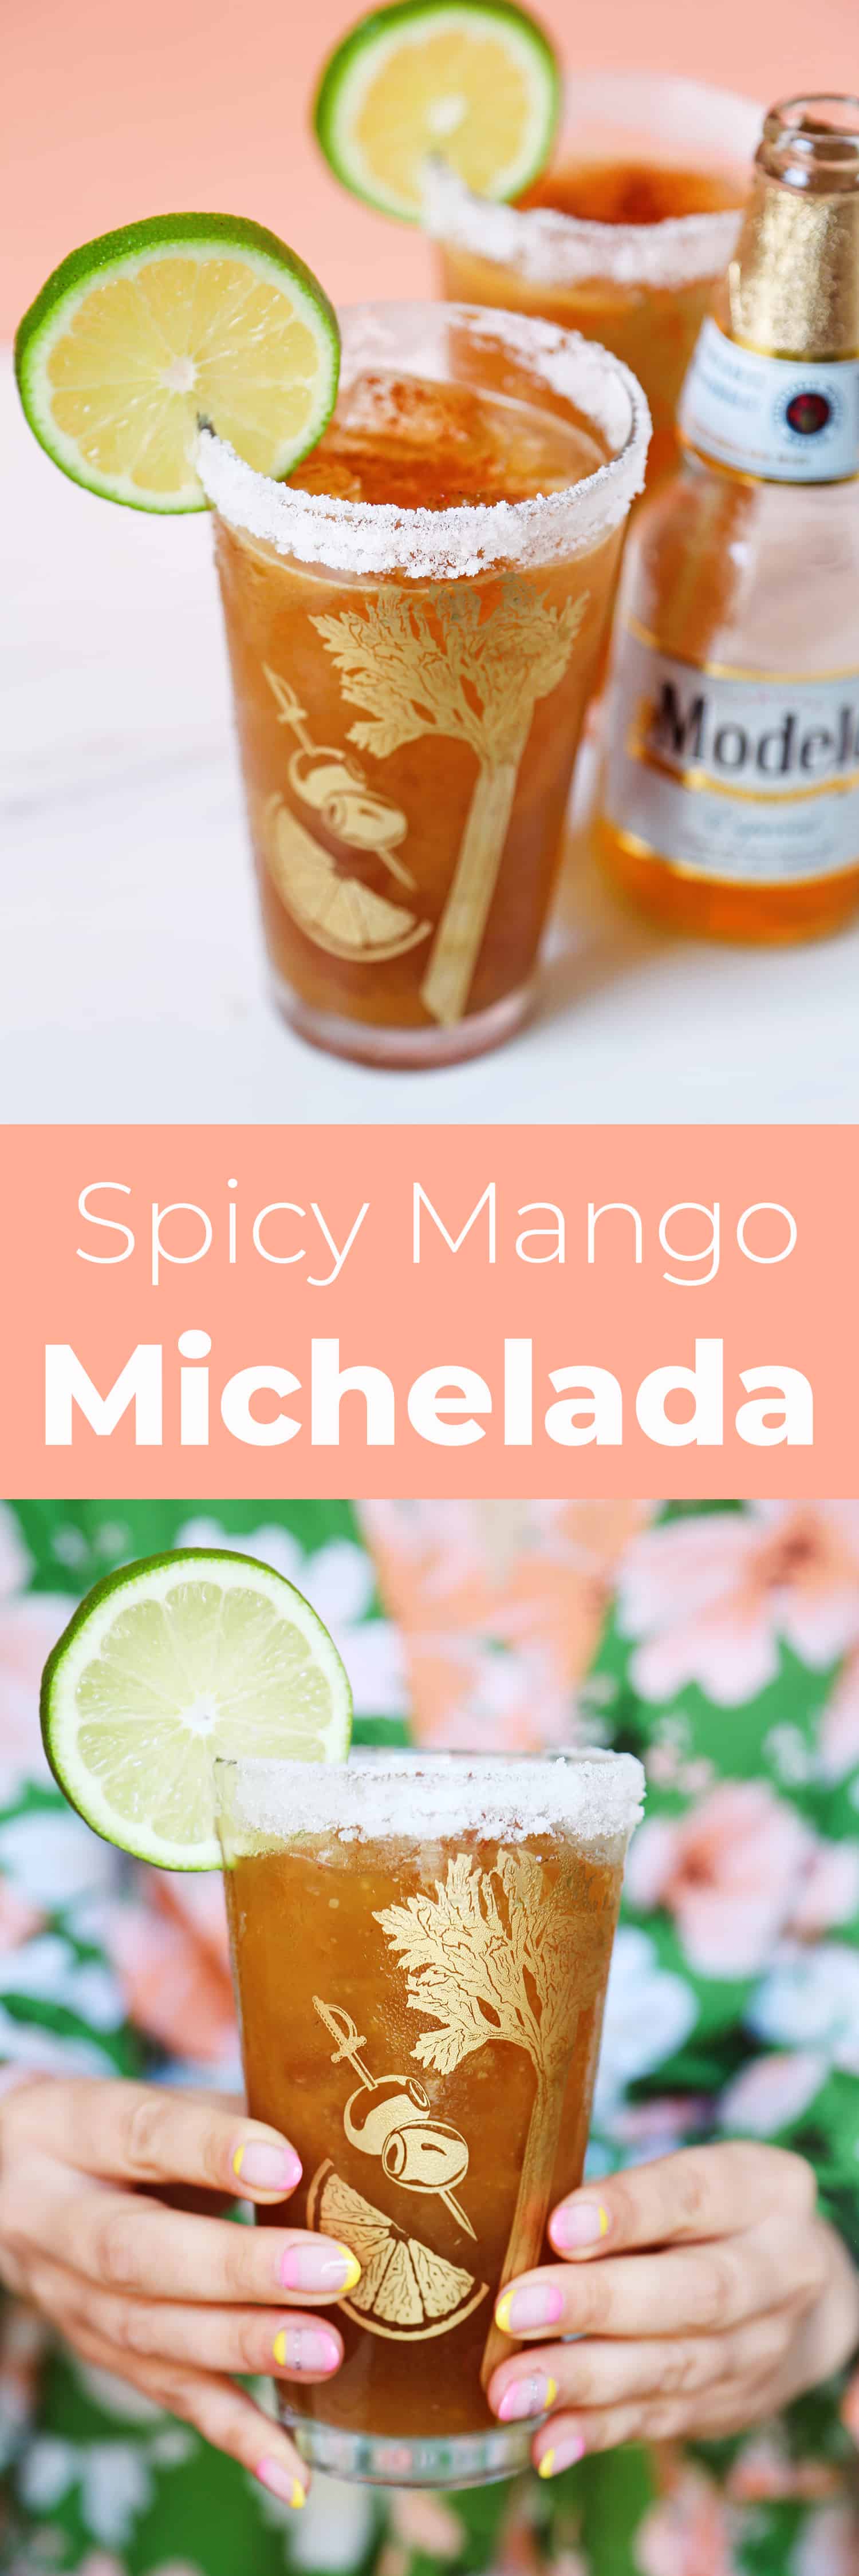 Spicy Mango Michelada